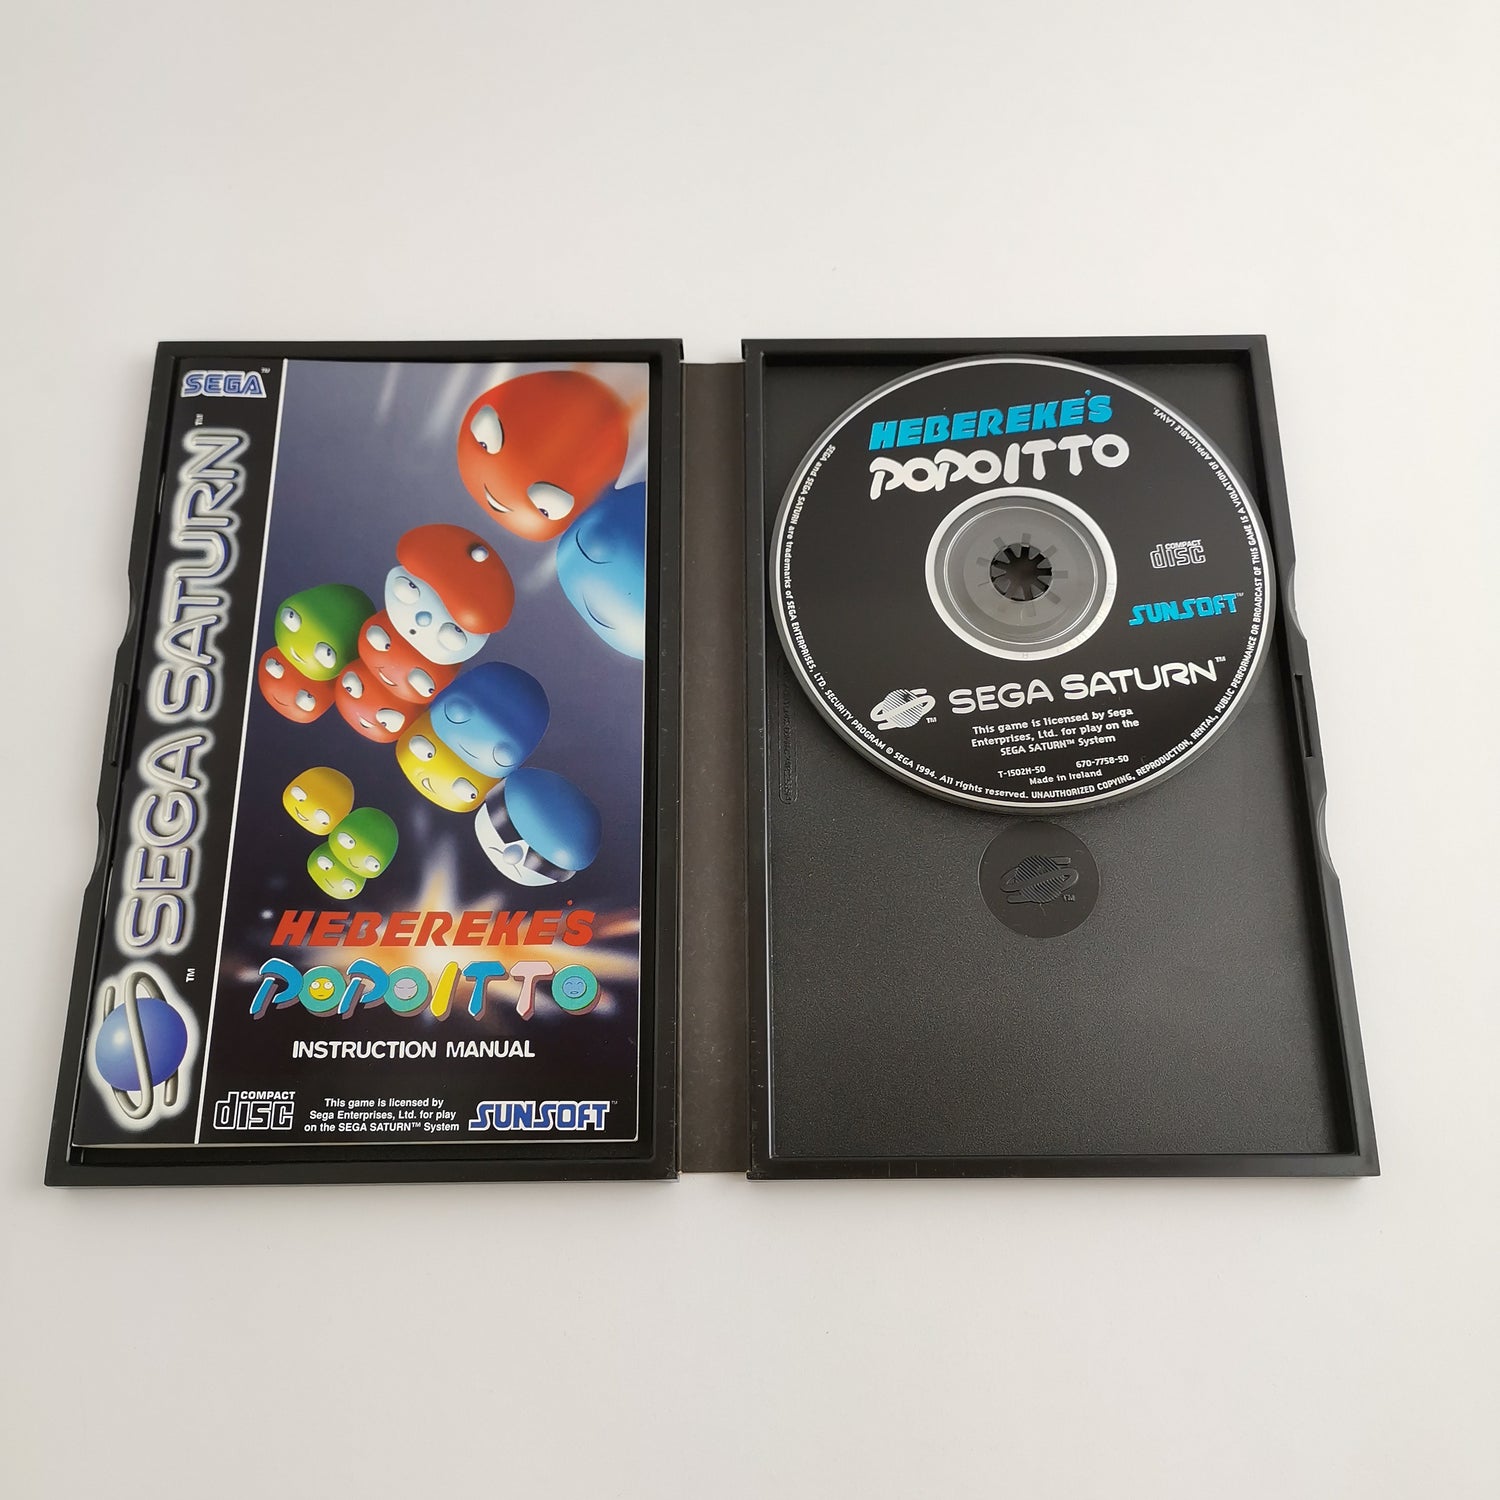 Sega Saturn game: Heberekes Popoitto by Sunsoft - original packaging & instructions | PAL